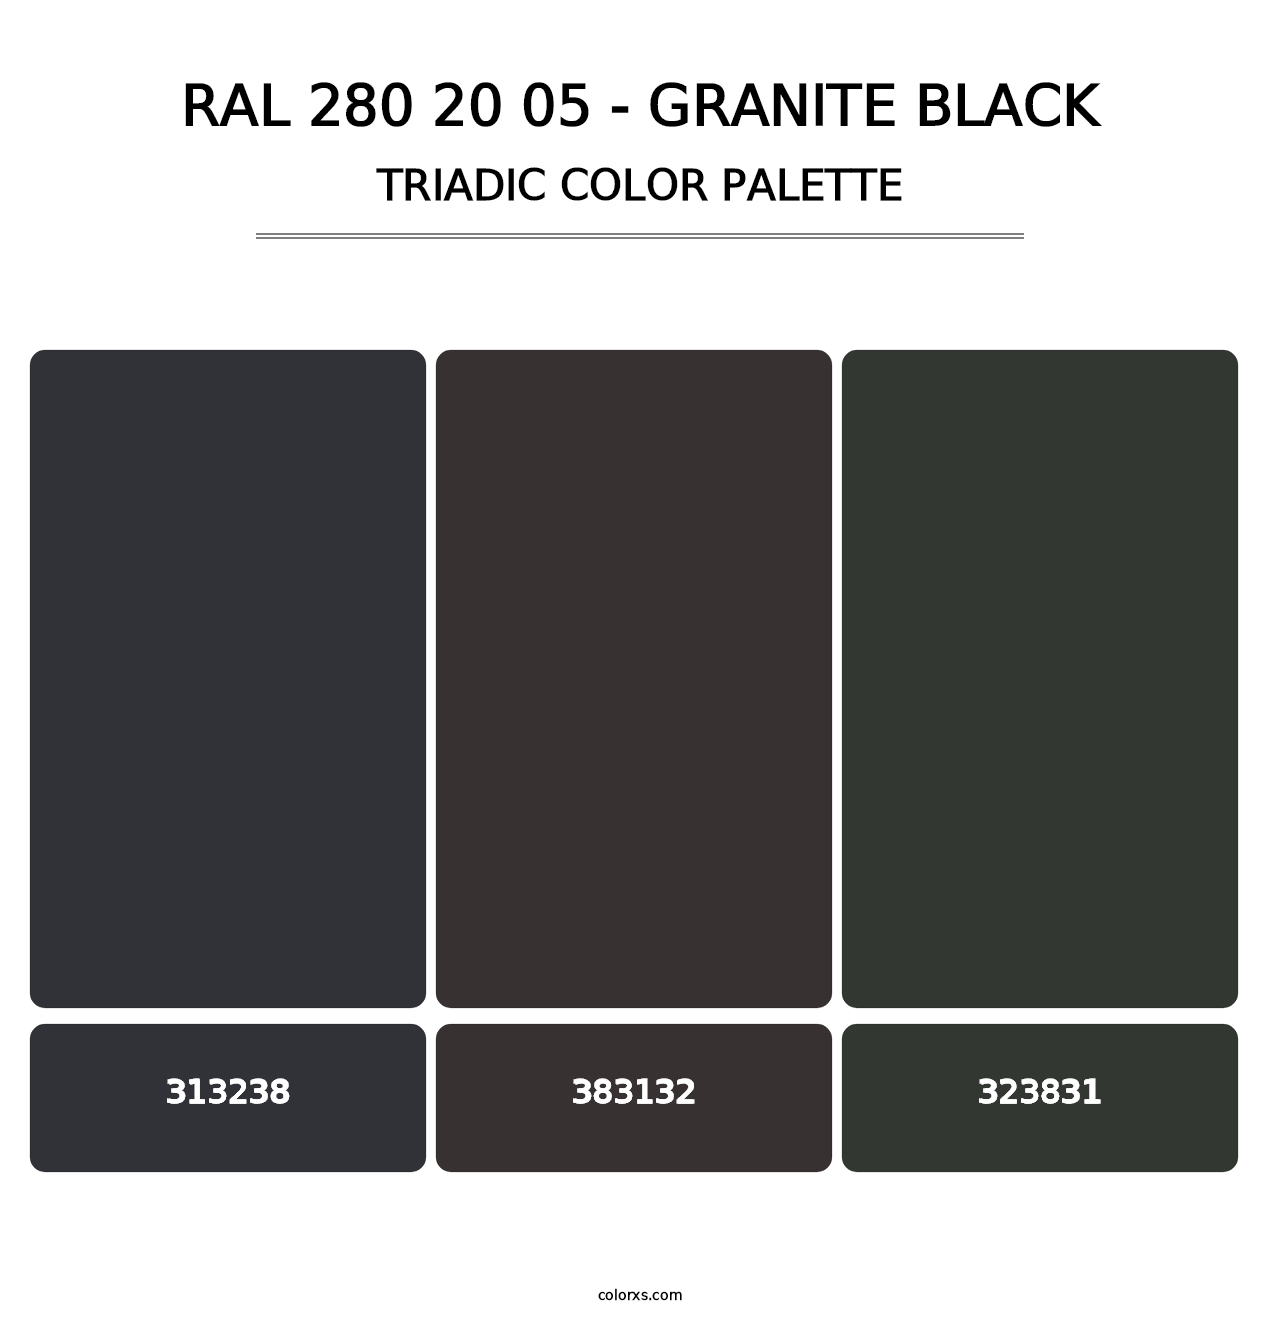 RAL 280 20 05 - Granite Black - Triadic Color Palette